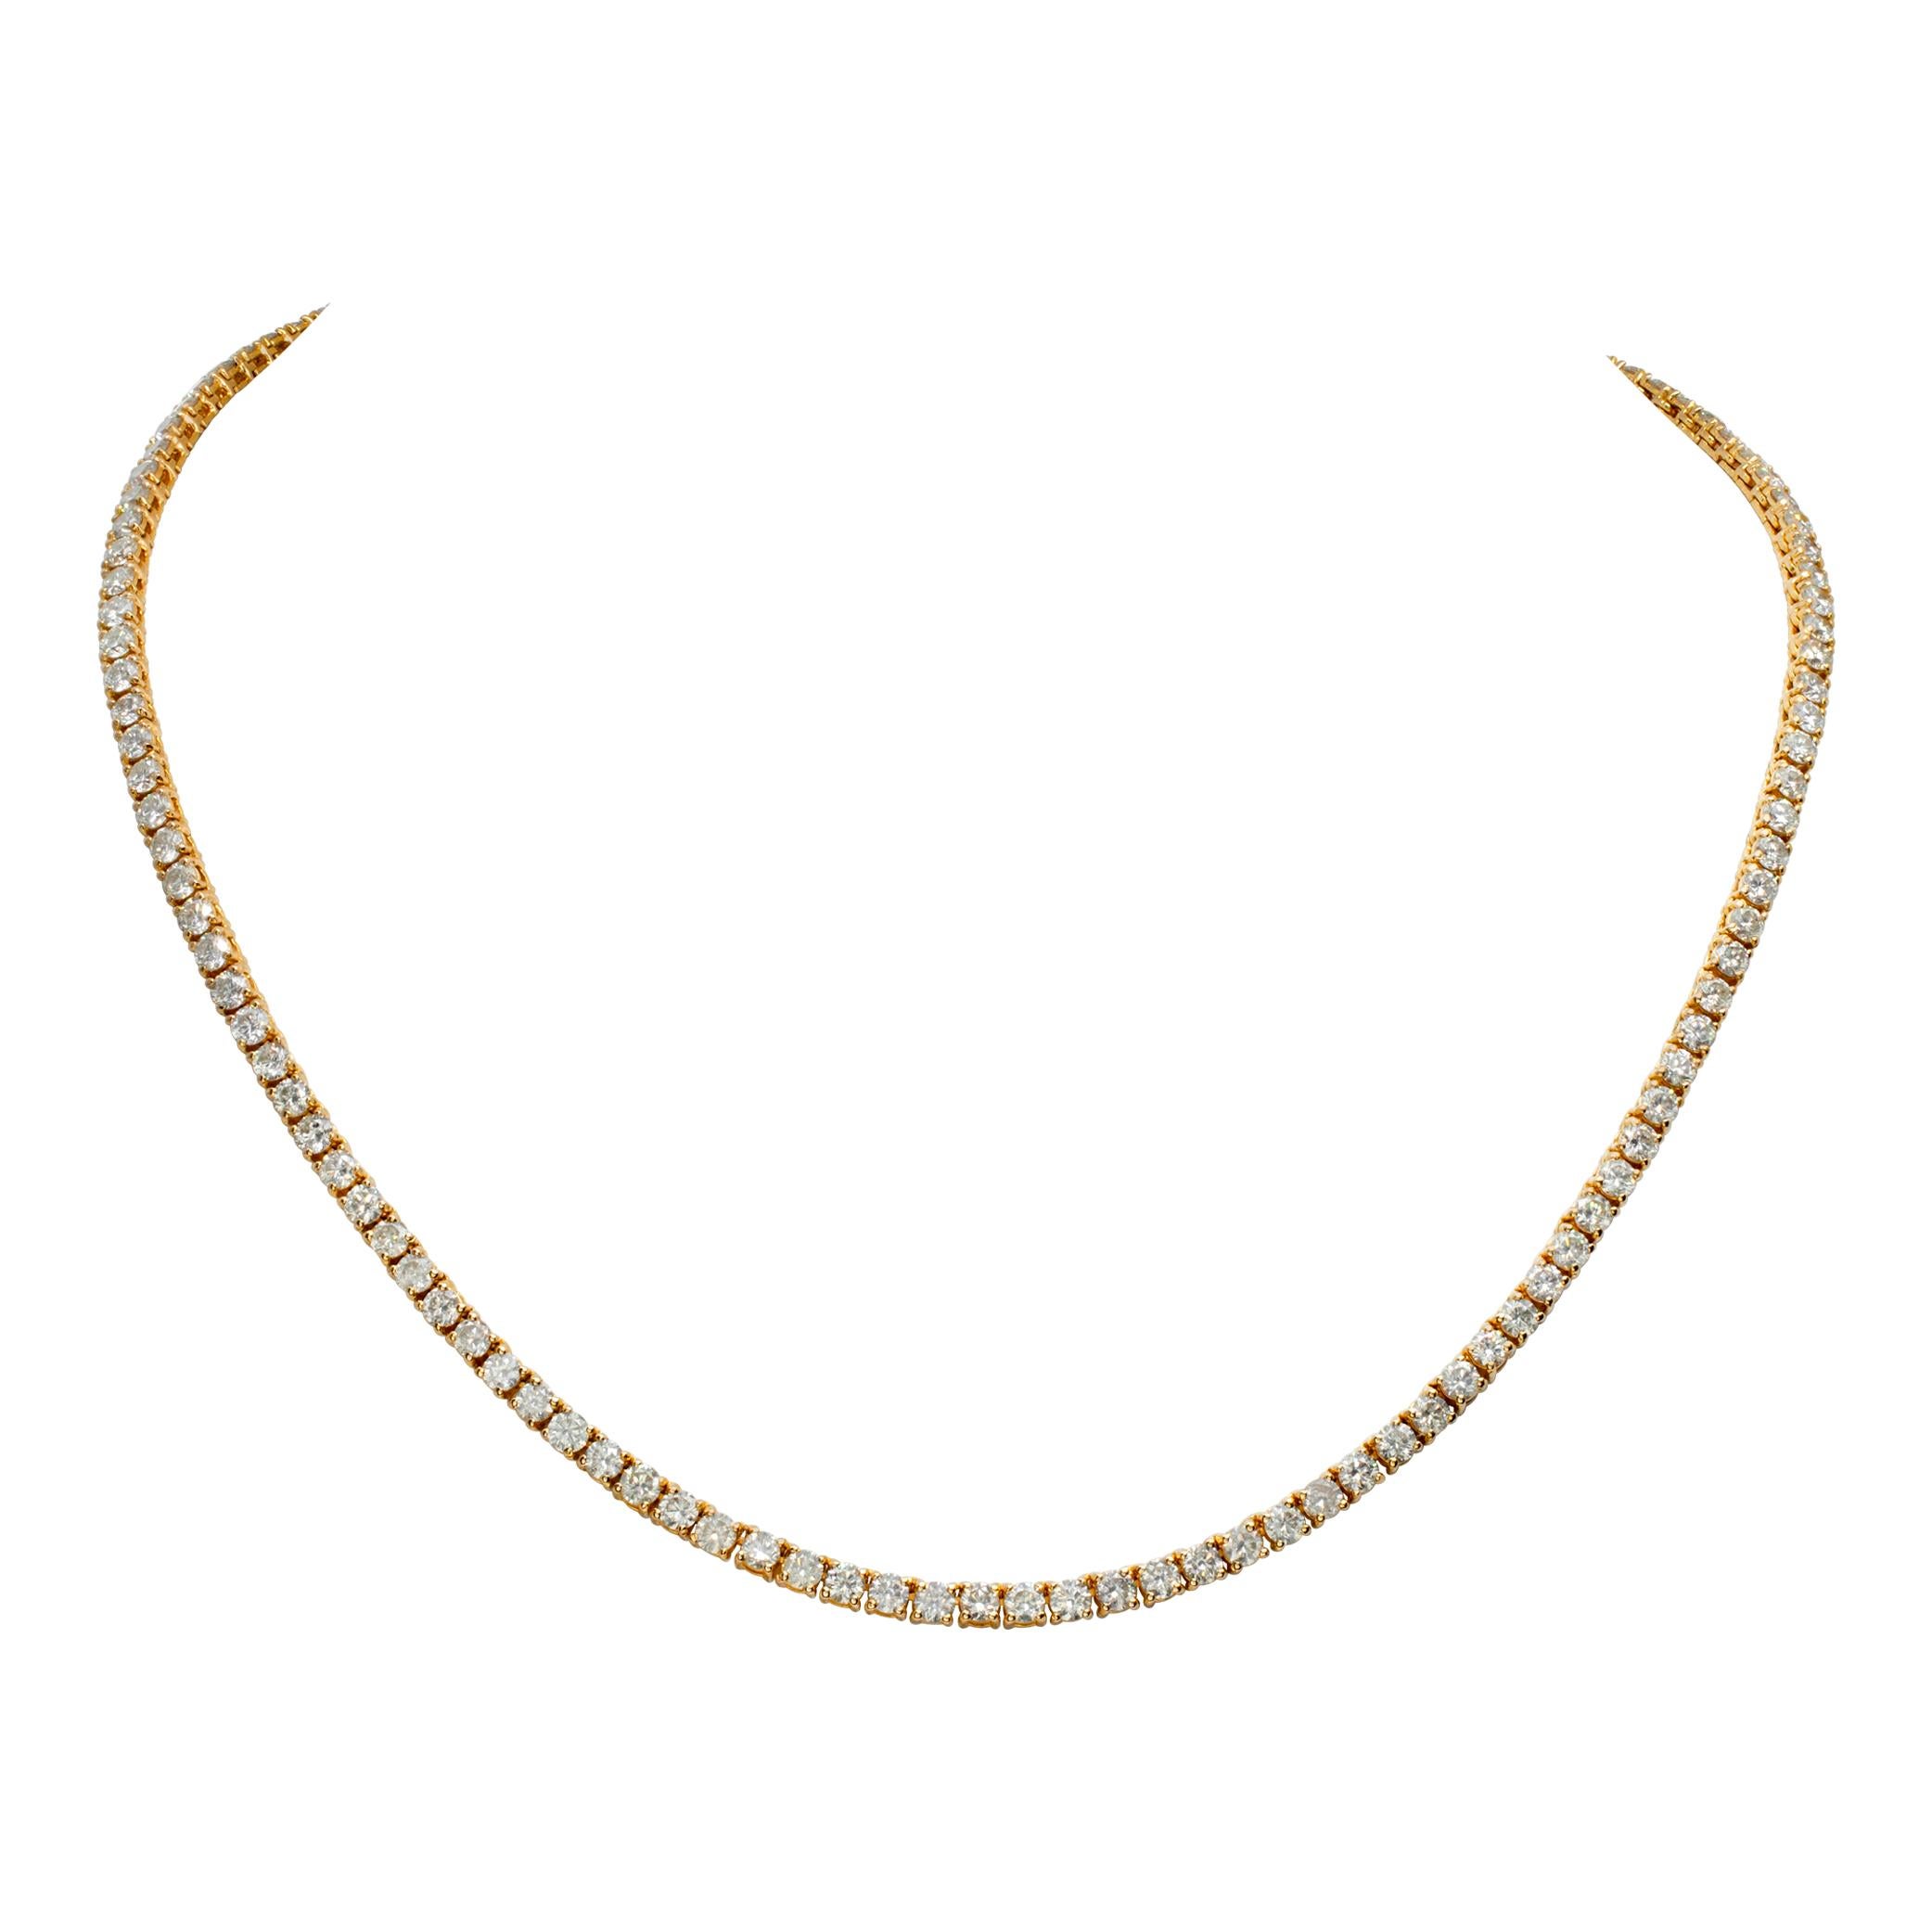 Diamond 14k yellow gold tennis necklace